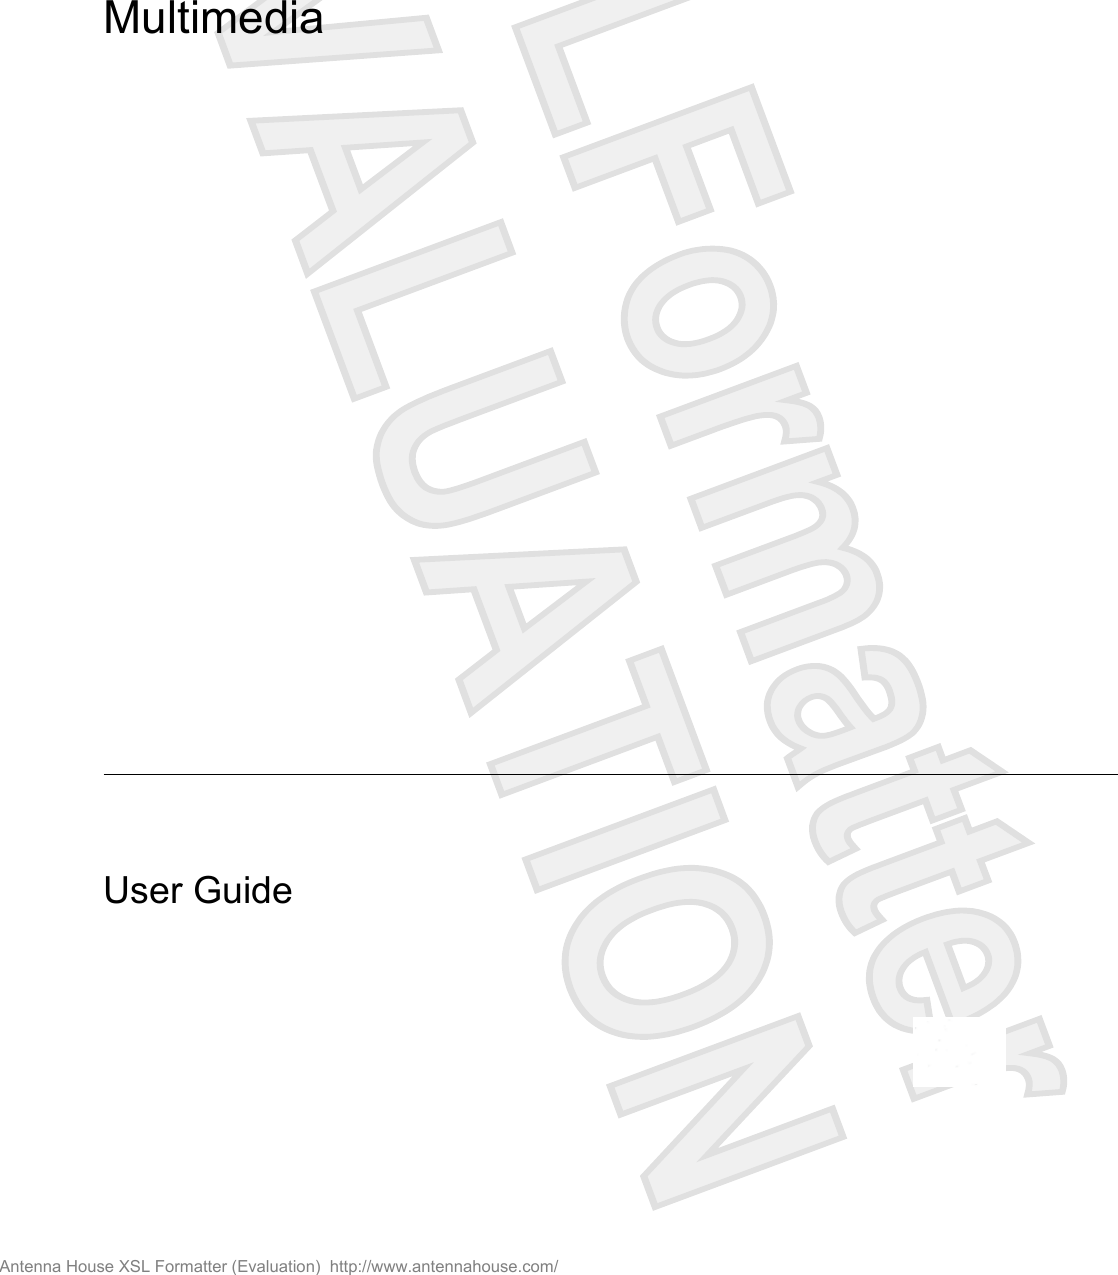 MultimediaUser GuideAntenna House XSL Formatter (Evaluation)  http://www.antennahouse.com/